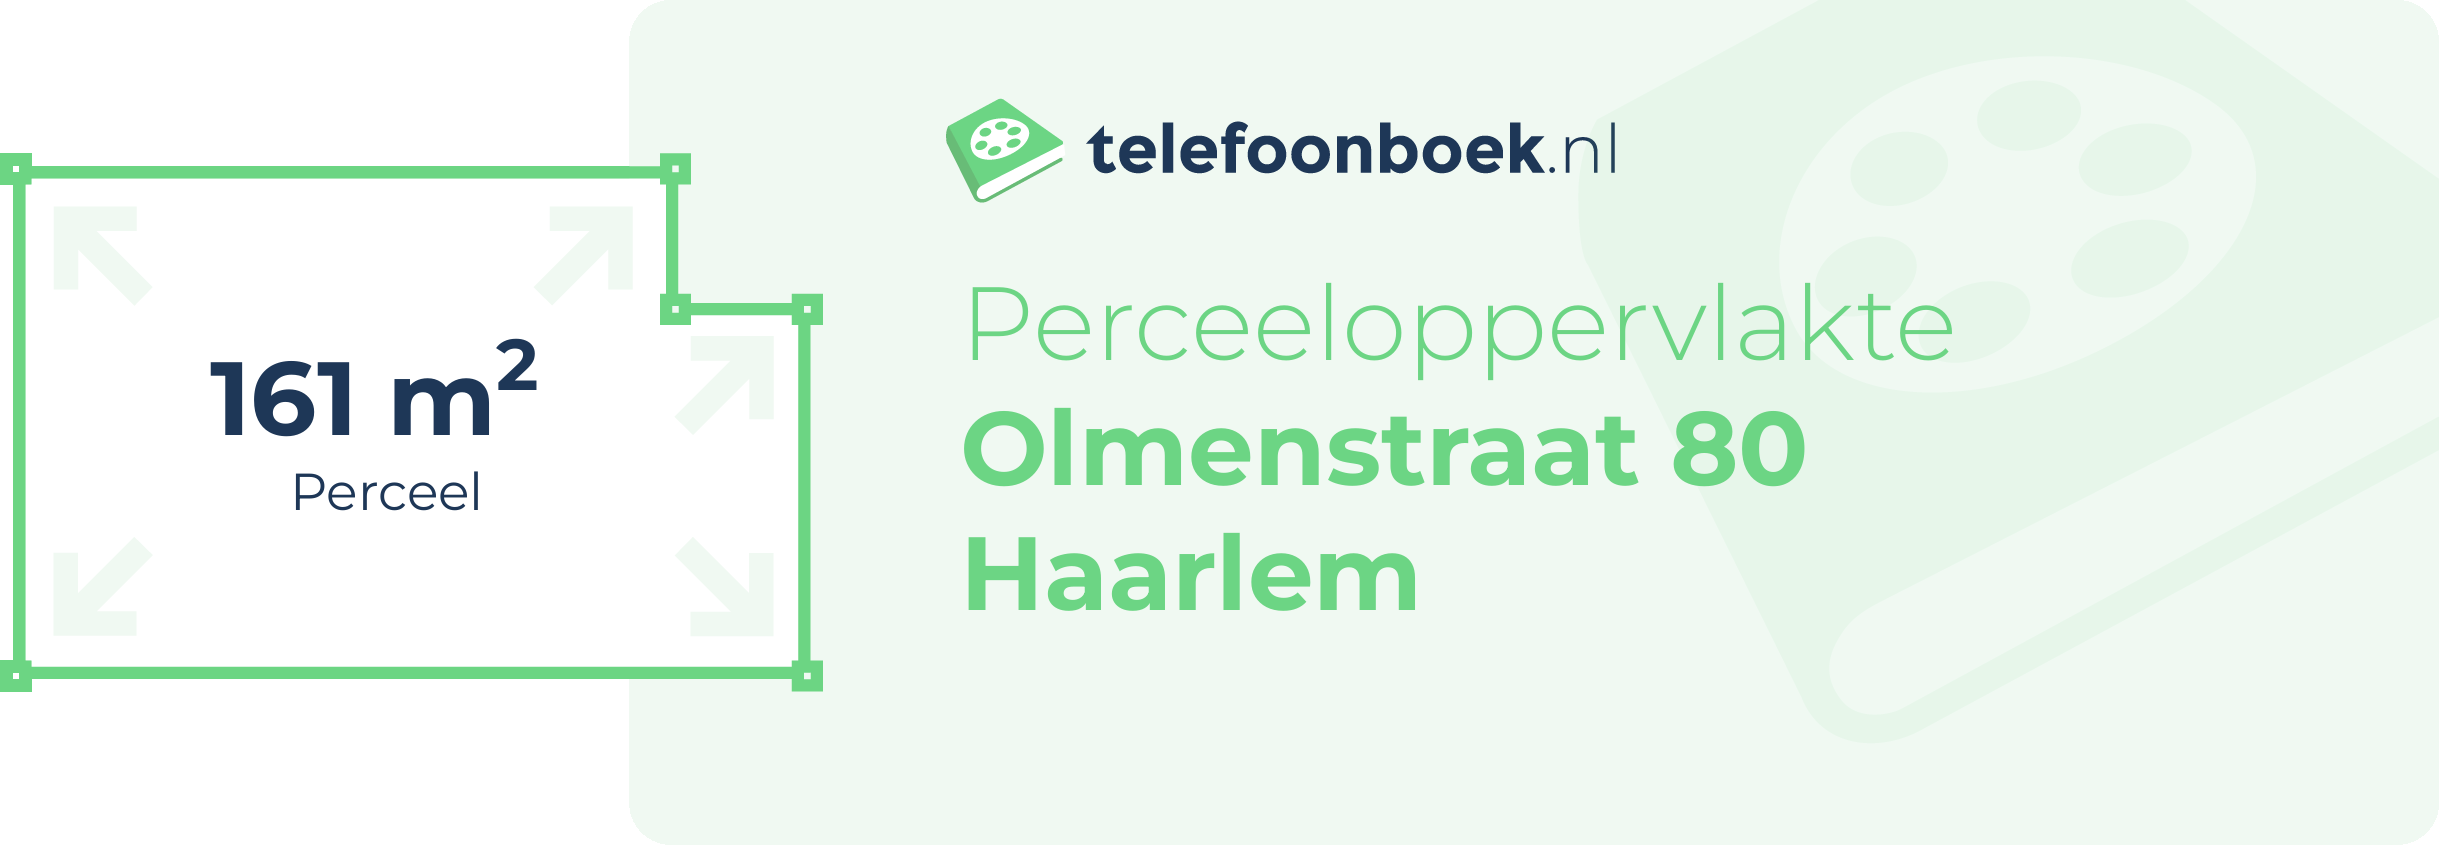 Perceeloppervlakte Olmenstraat 80 Haarlem